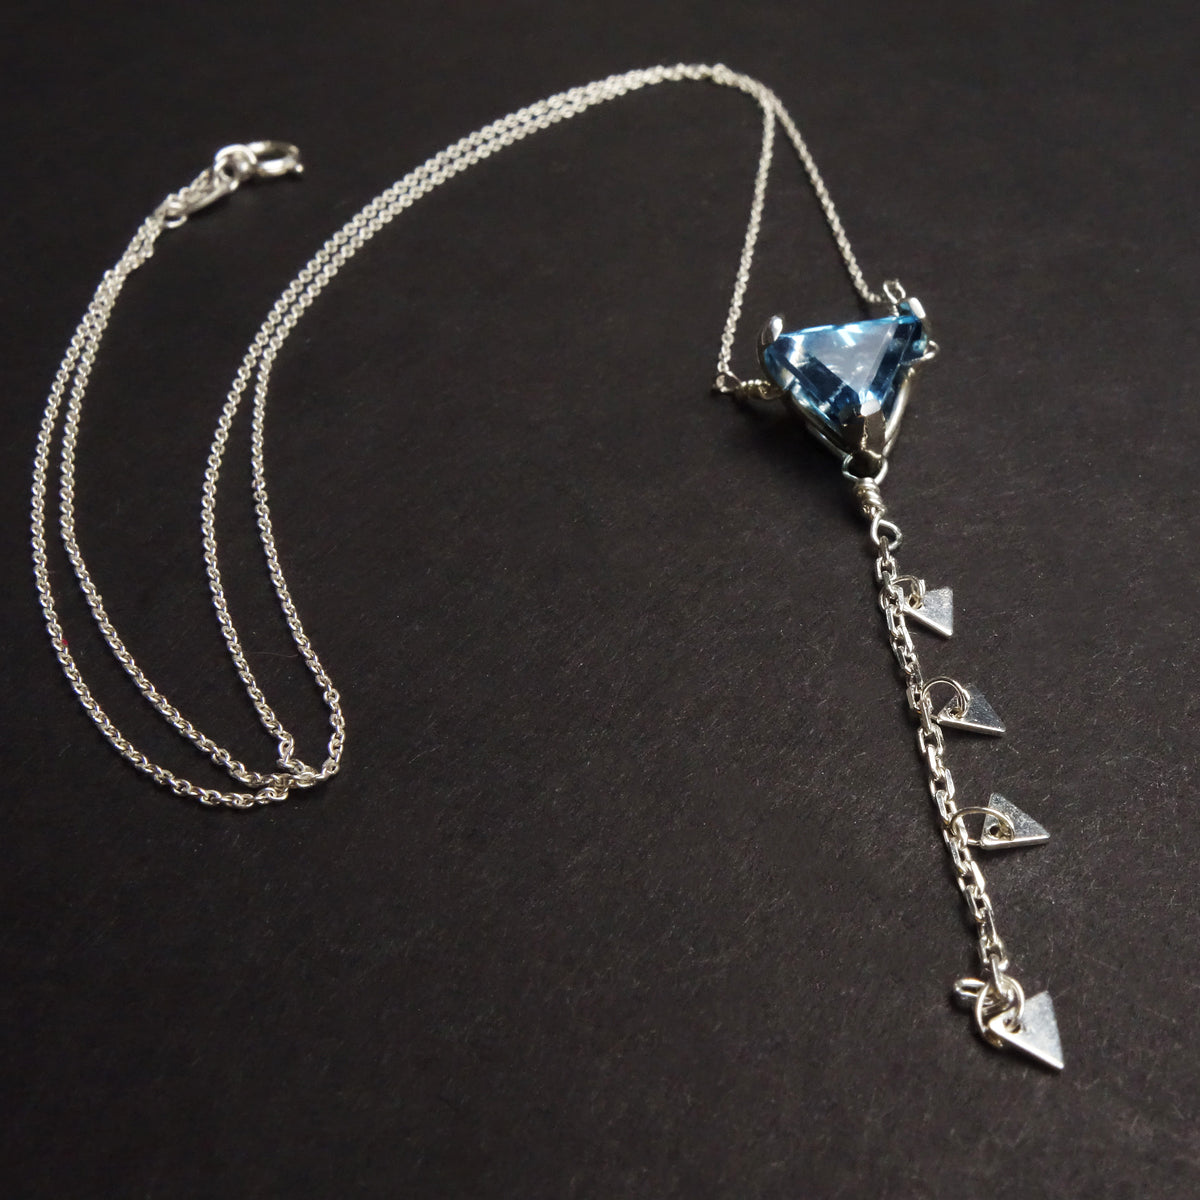 Her Secret Heart: blue topaz necklace with secret heart backing